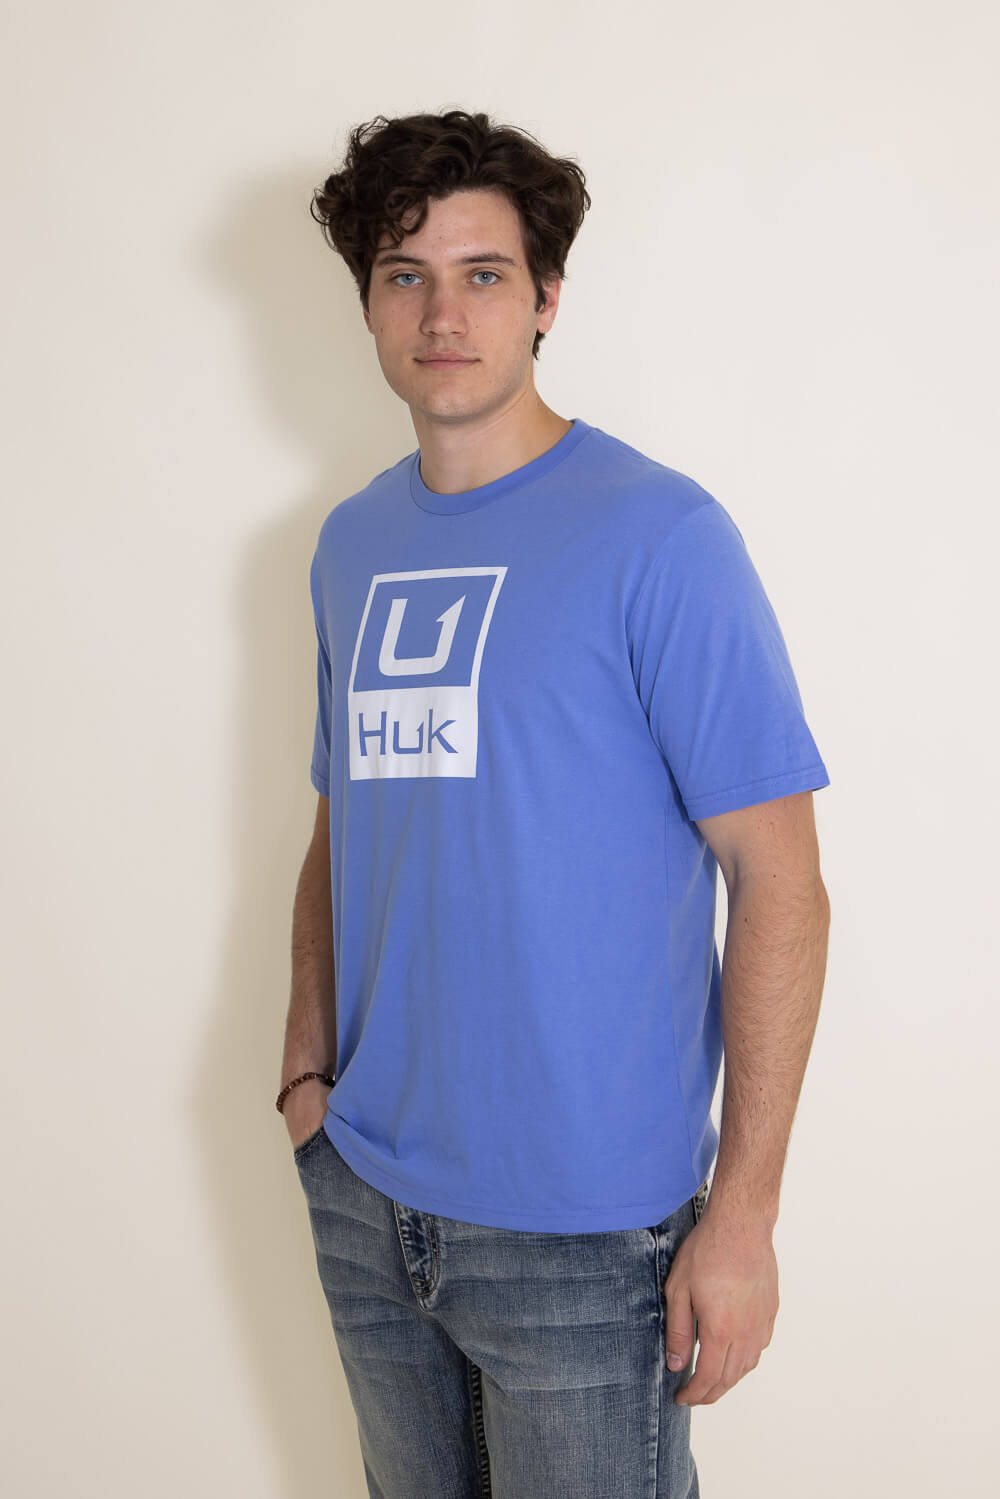 Huk Stacked Logo Tee